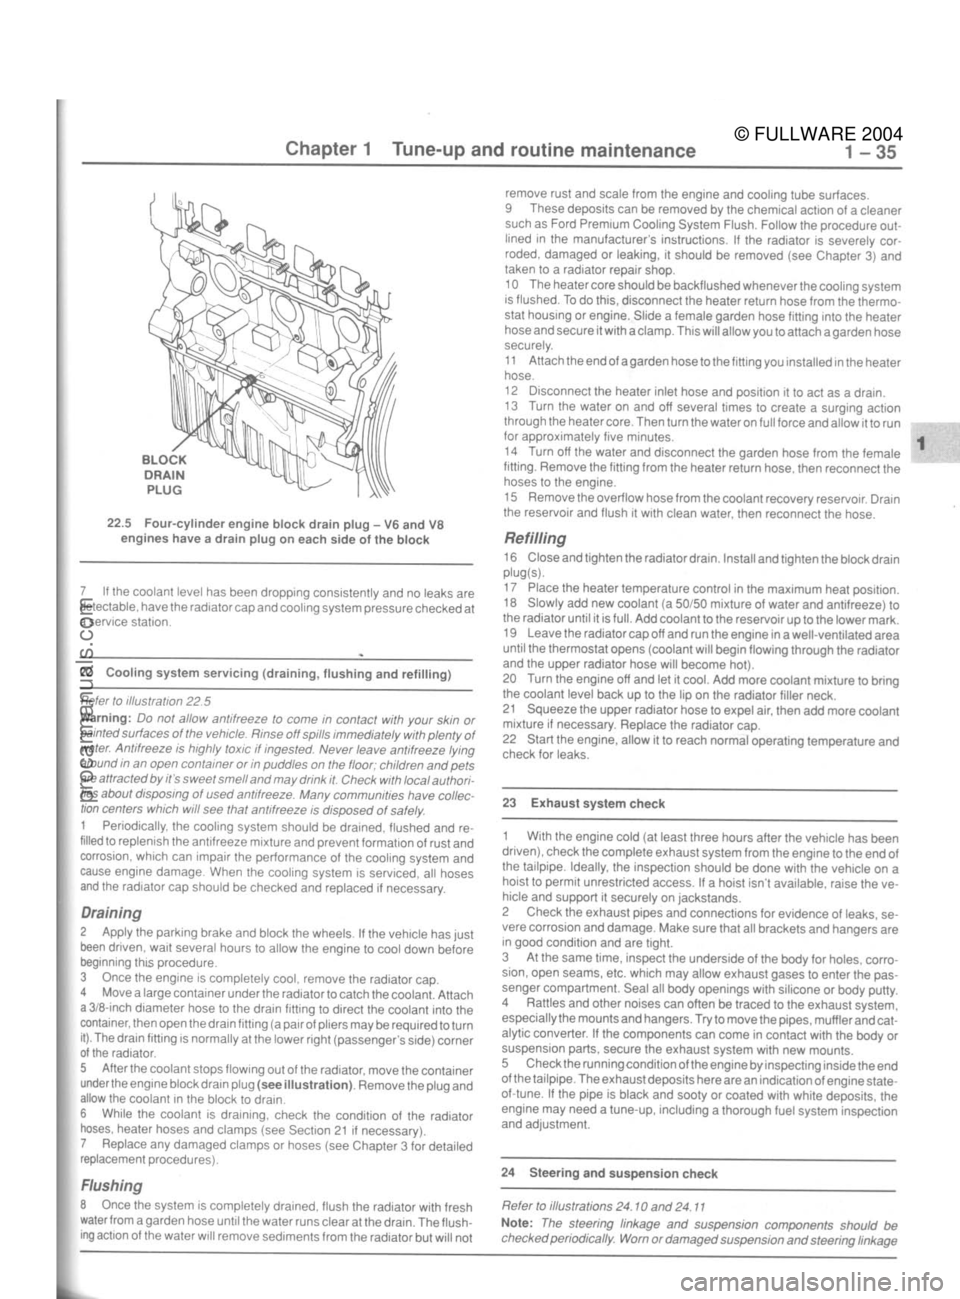 FORD MUSTANG 1979  Service Manual PDF 
© FULLWARE 2004procarmanuals.com 